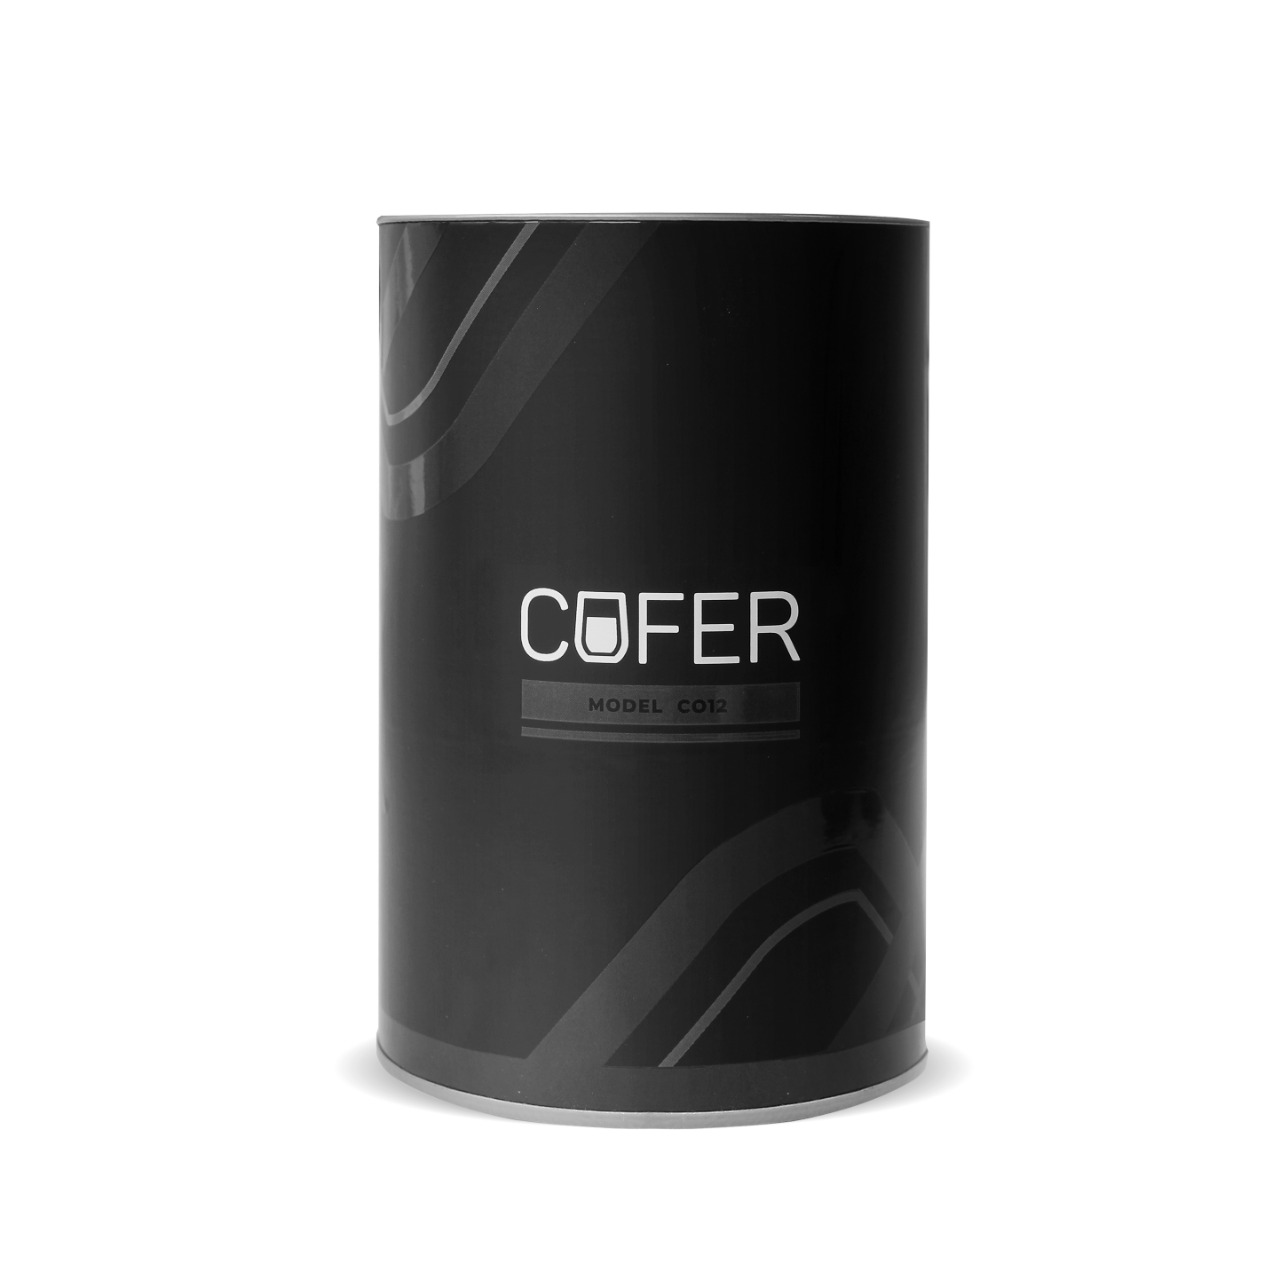 Набор Cofer Tube софт-тач CO12s black (оранжевый)